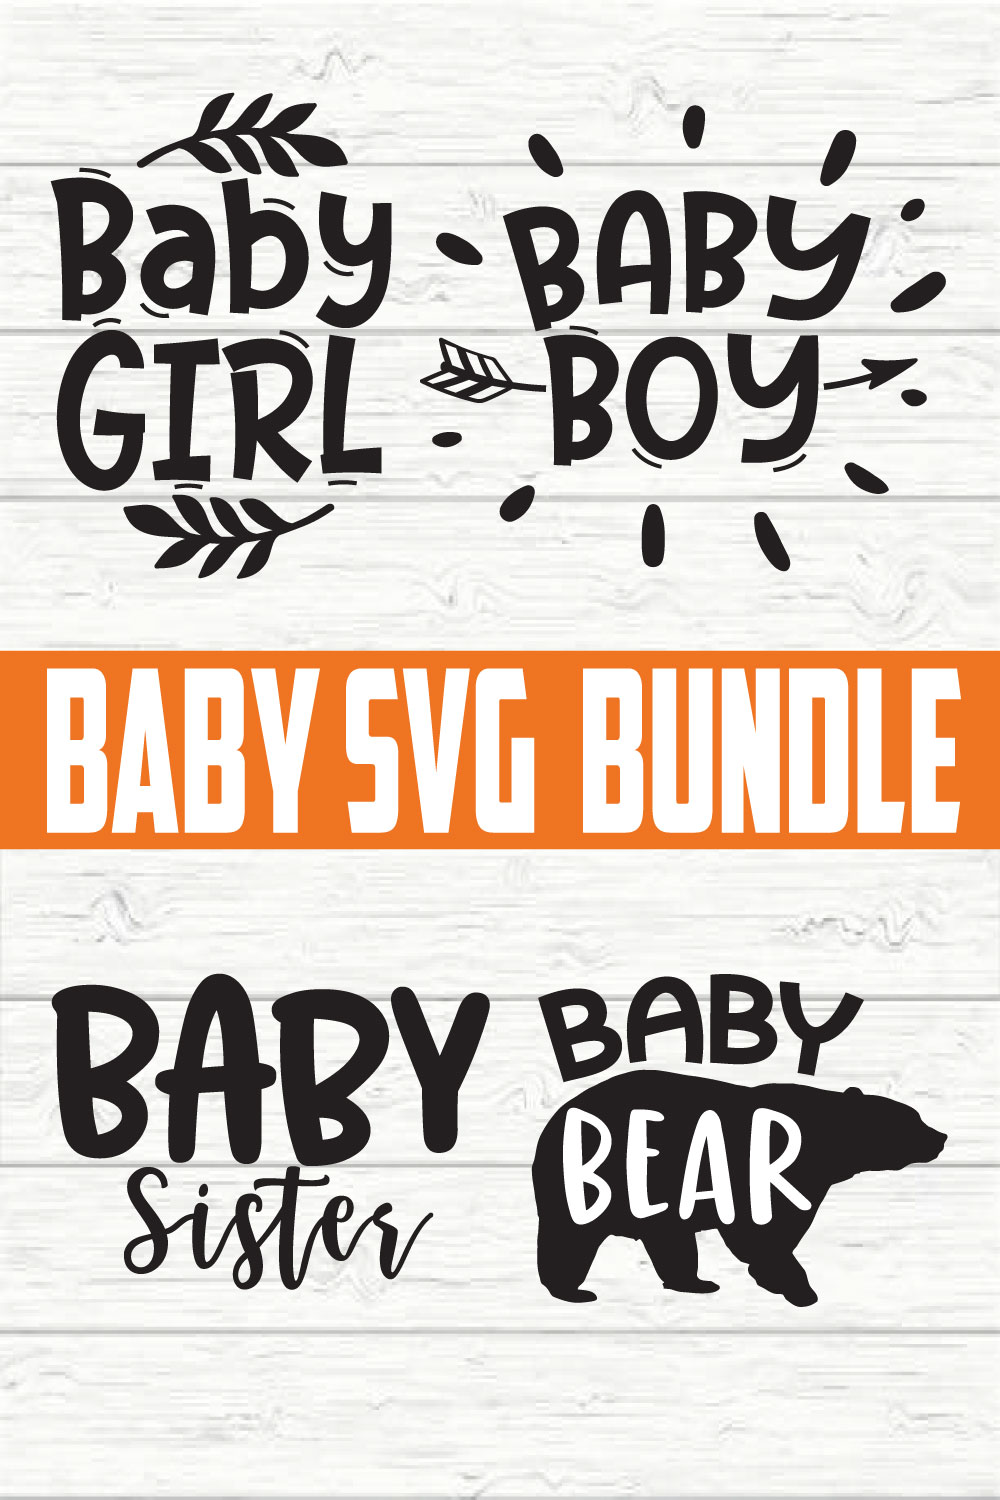 Baby Svg Bundle vol 18 pinterest preview image.